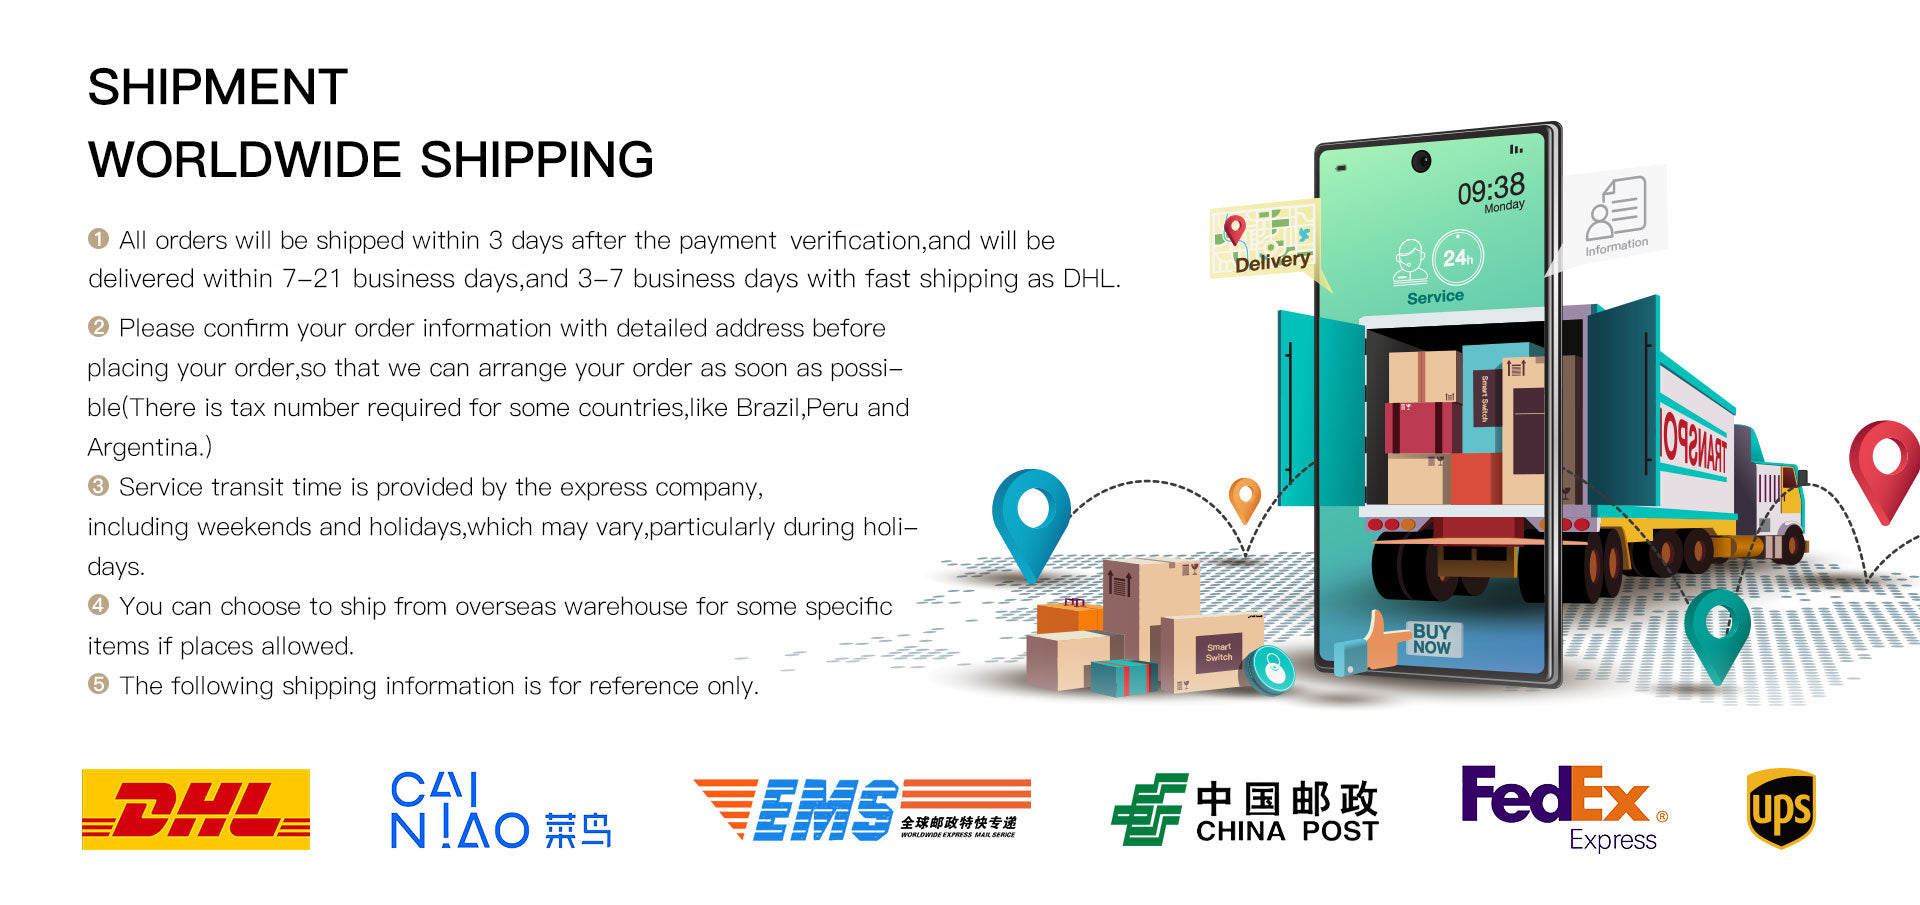 shipment worldwide shipping